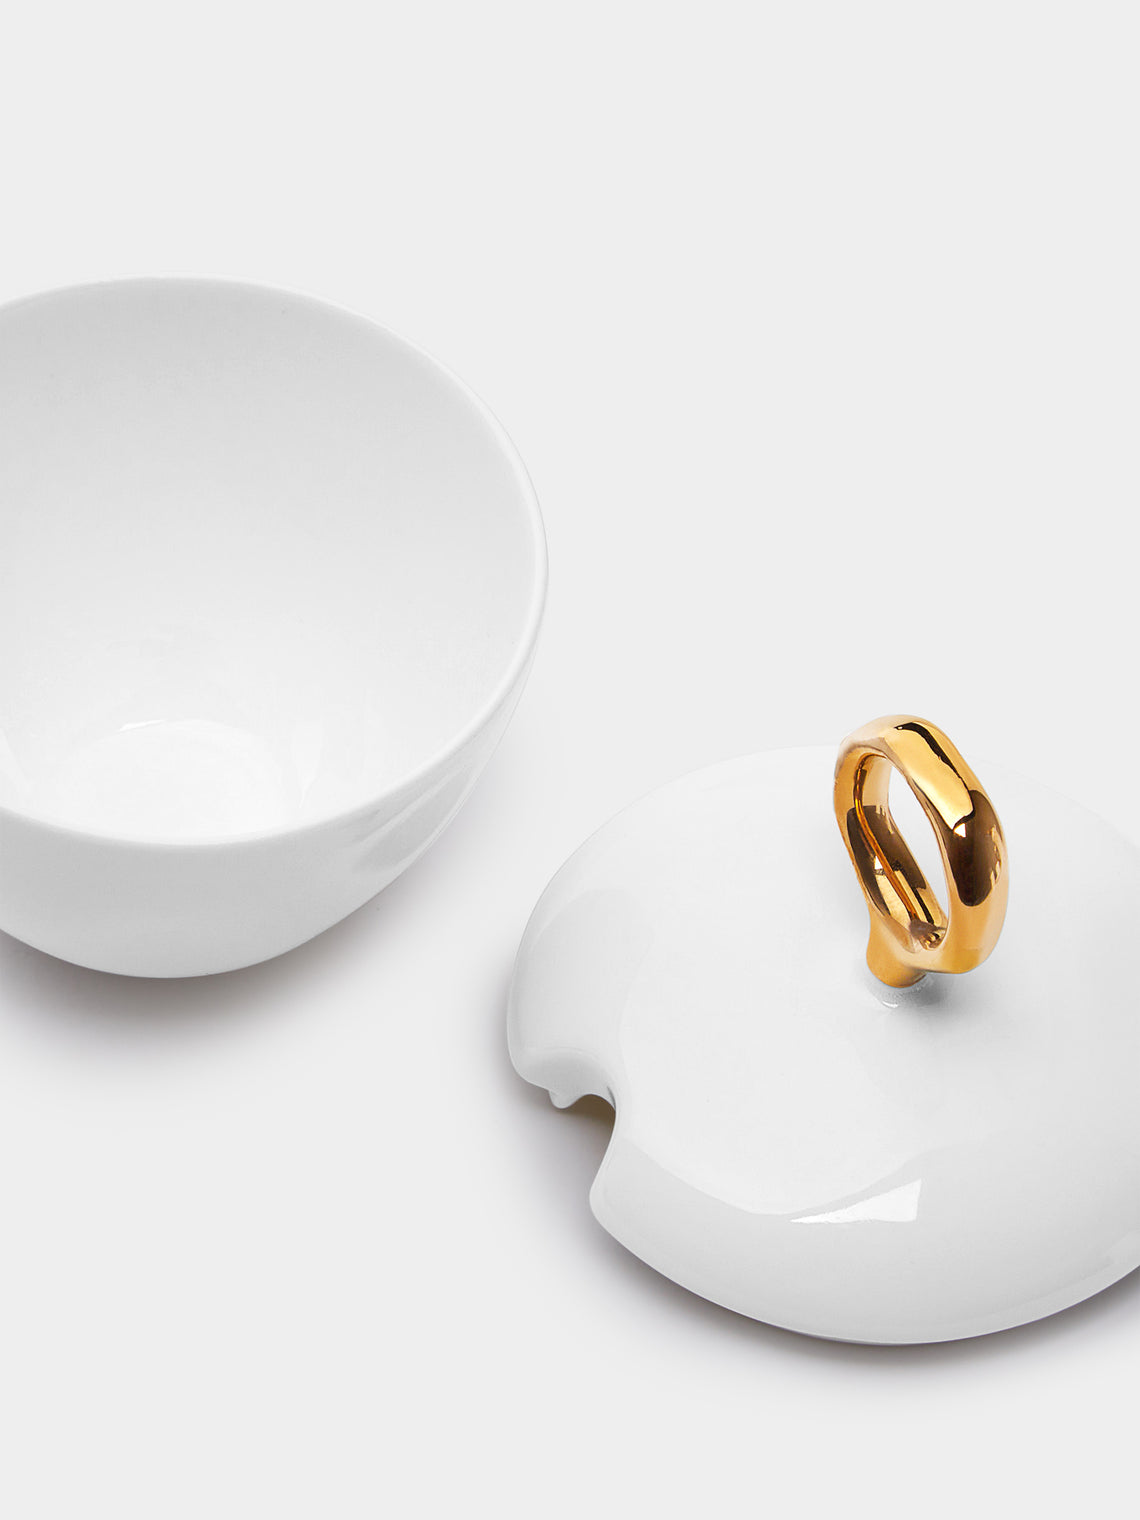 Feldspar - Hand-Painted 24ct Gold and Bone China Sugar Bowl - White - ABASK